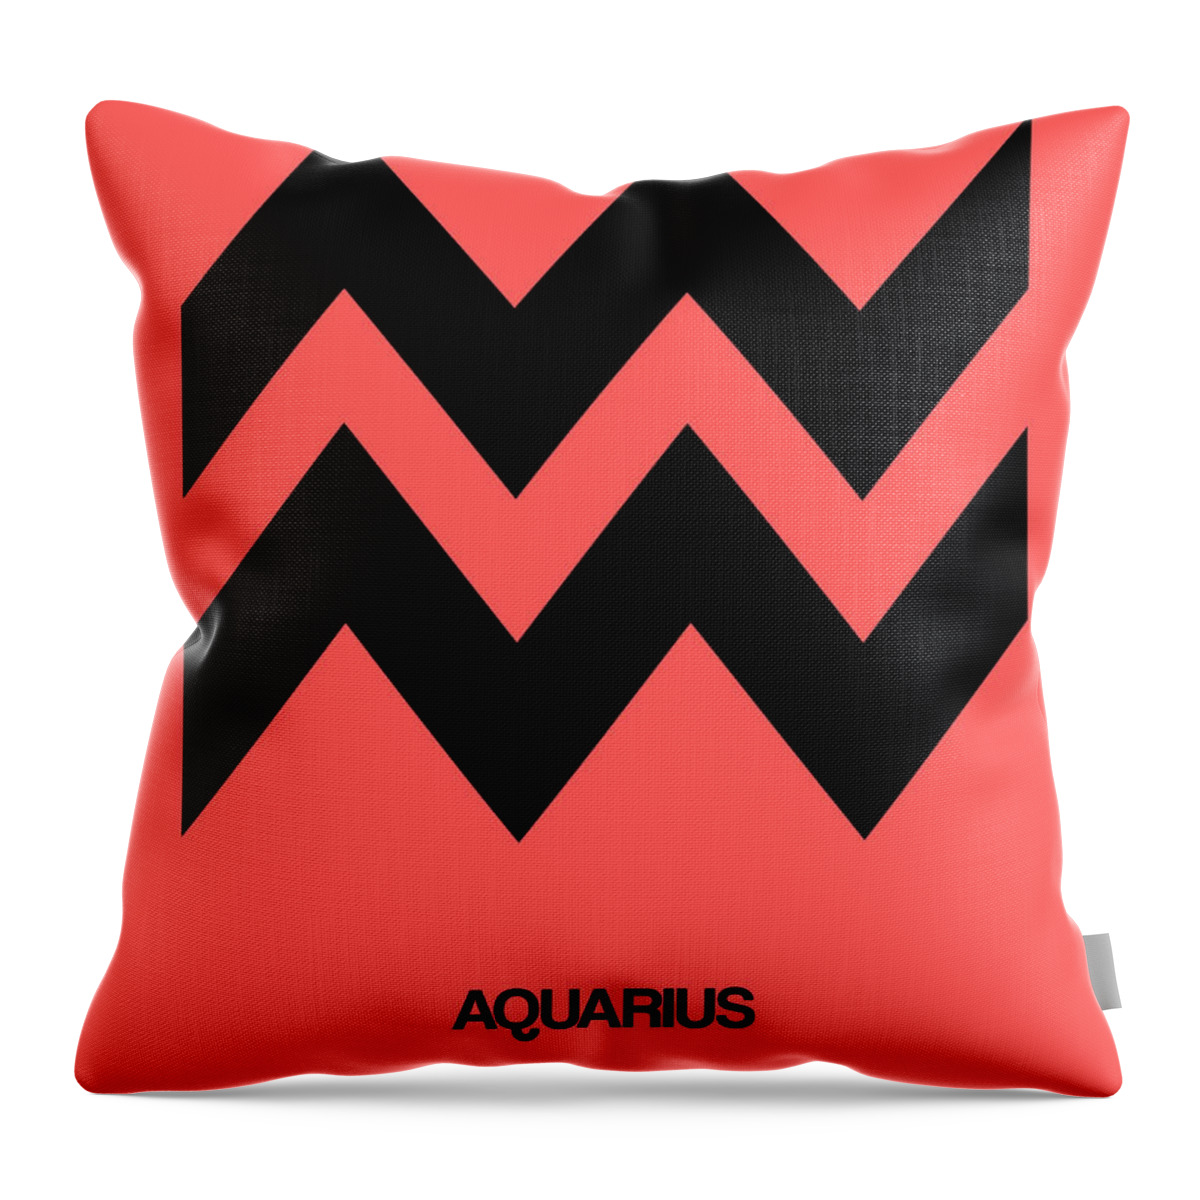 Aquarius Throw Pillow featuring the digital art Aquarius Zodiac Sign Black by Naxart Studio